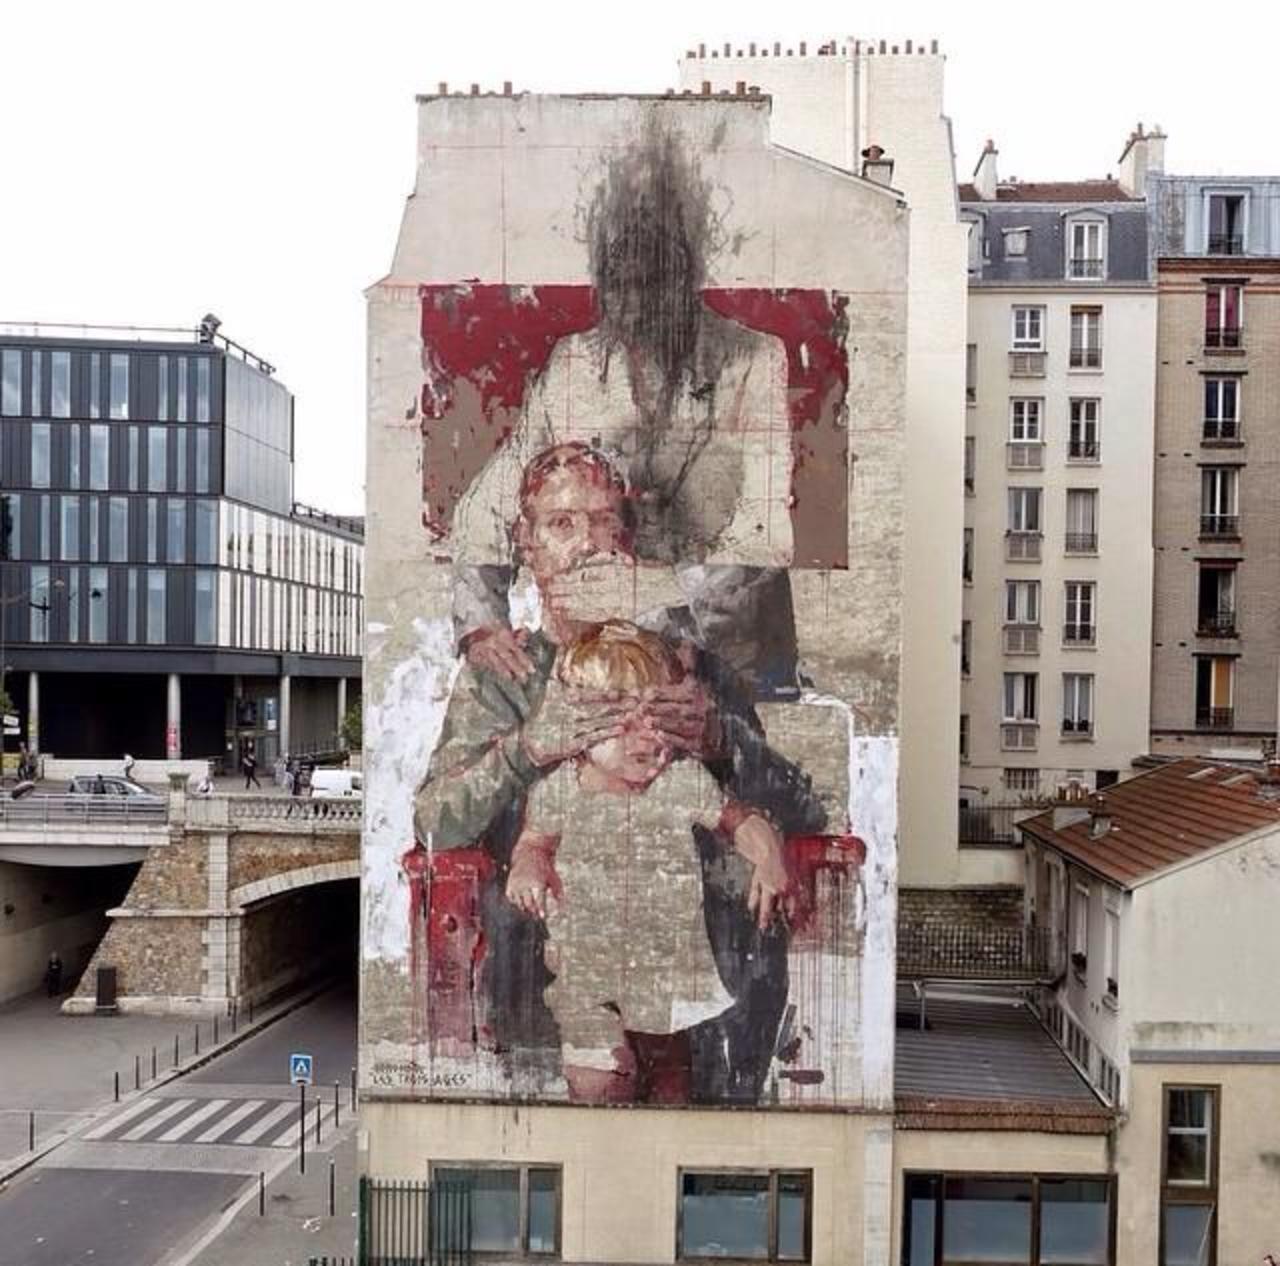 “@GoogleStreetArt: New large scale Street Art by Borondo in Paris, France. 

#art #mural #graffiti #streetart http://t.co/cRf39C53fX”